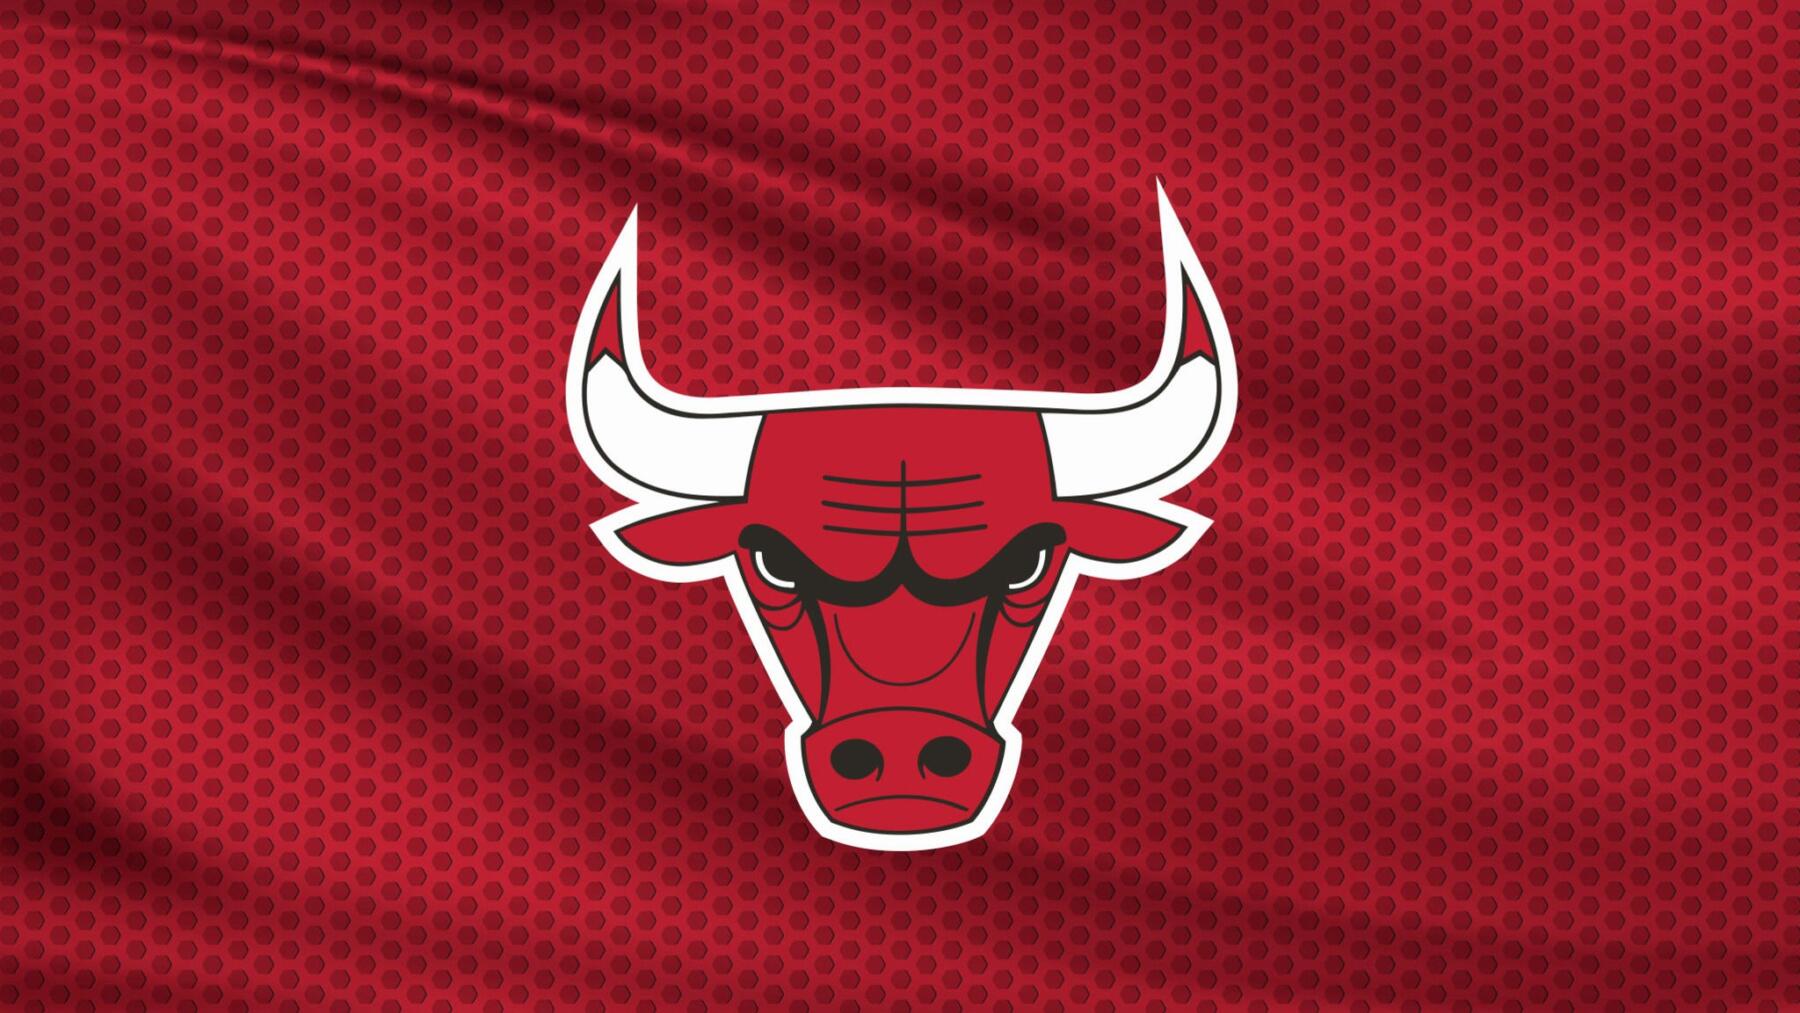 Chicago Bulls11